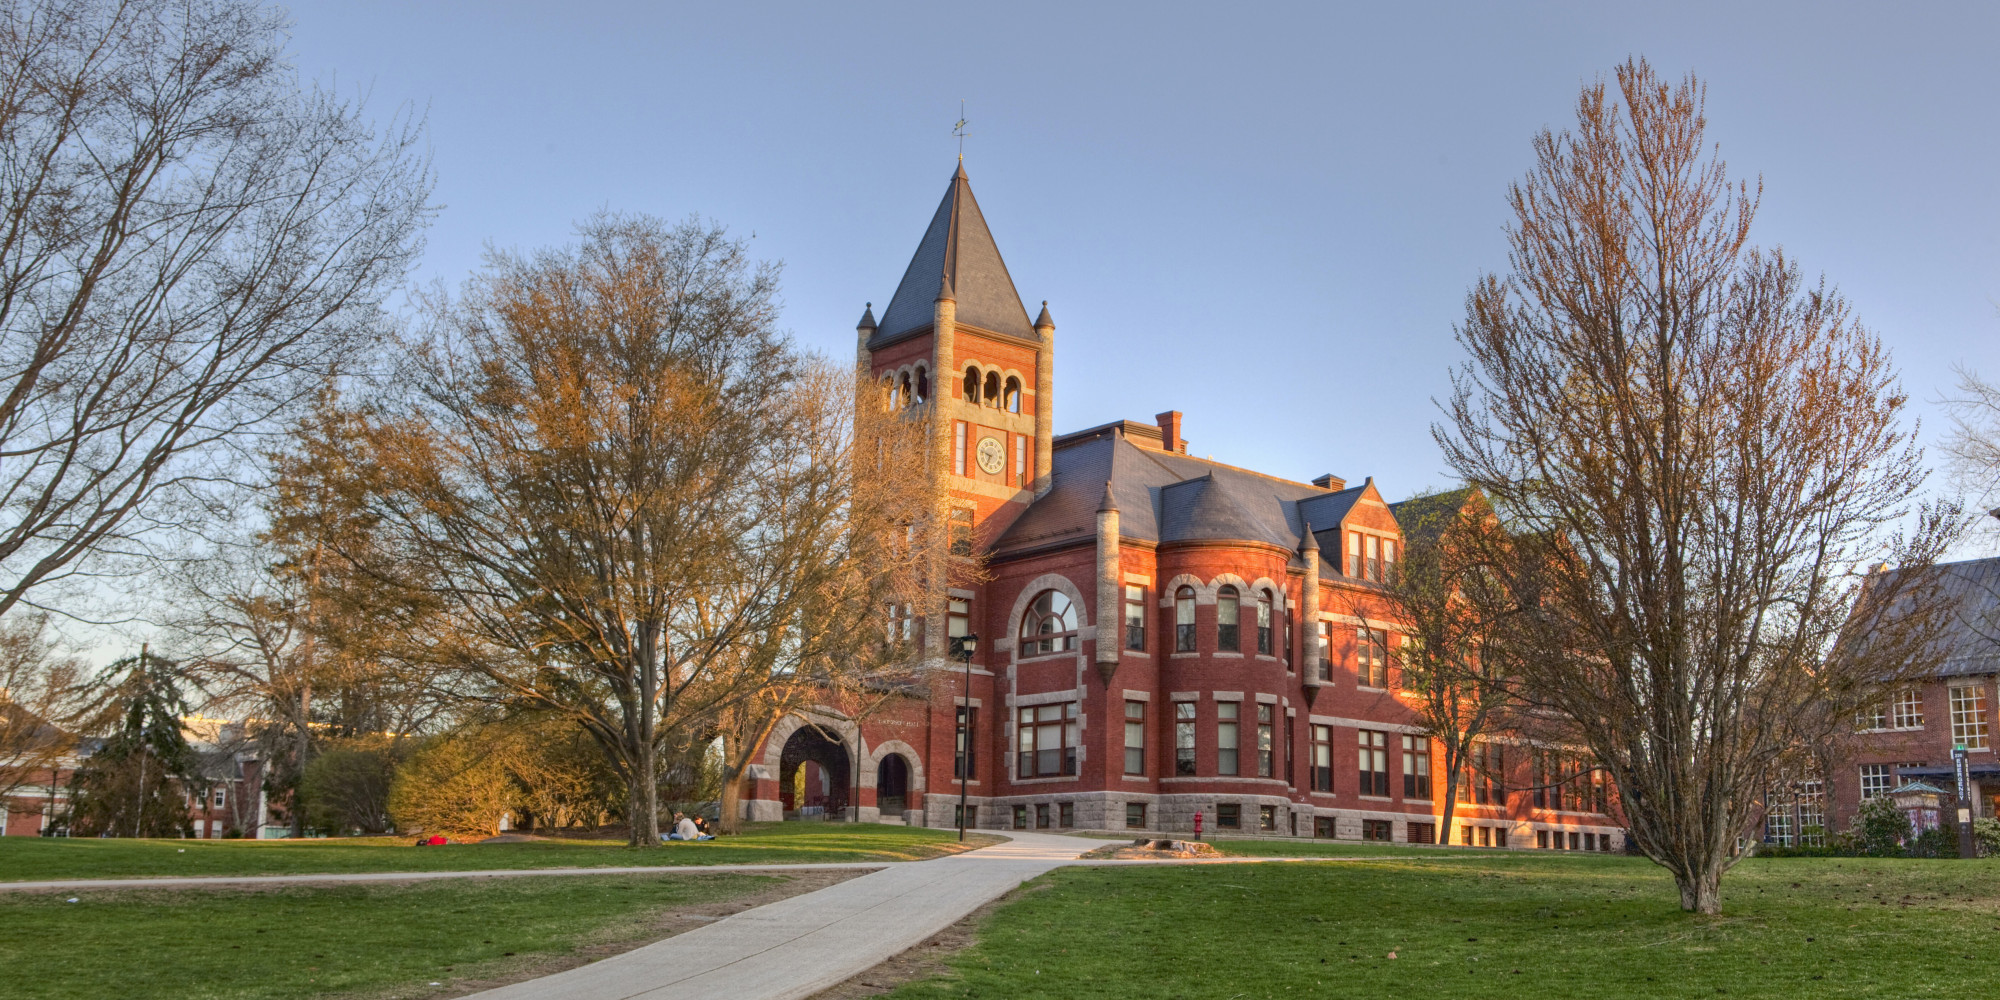 University of New Hampshire - Thompson Hall